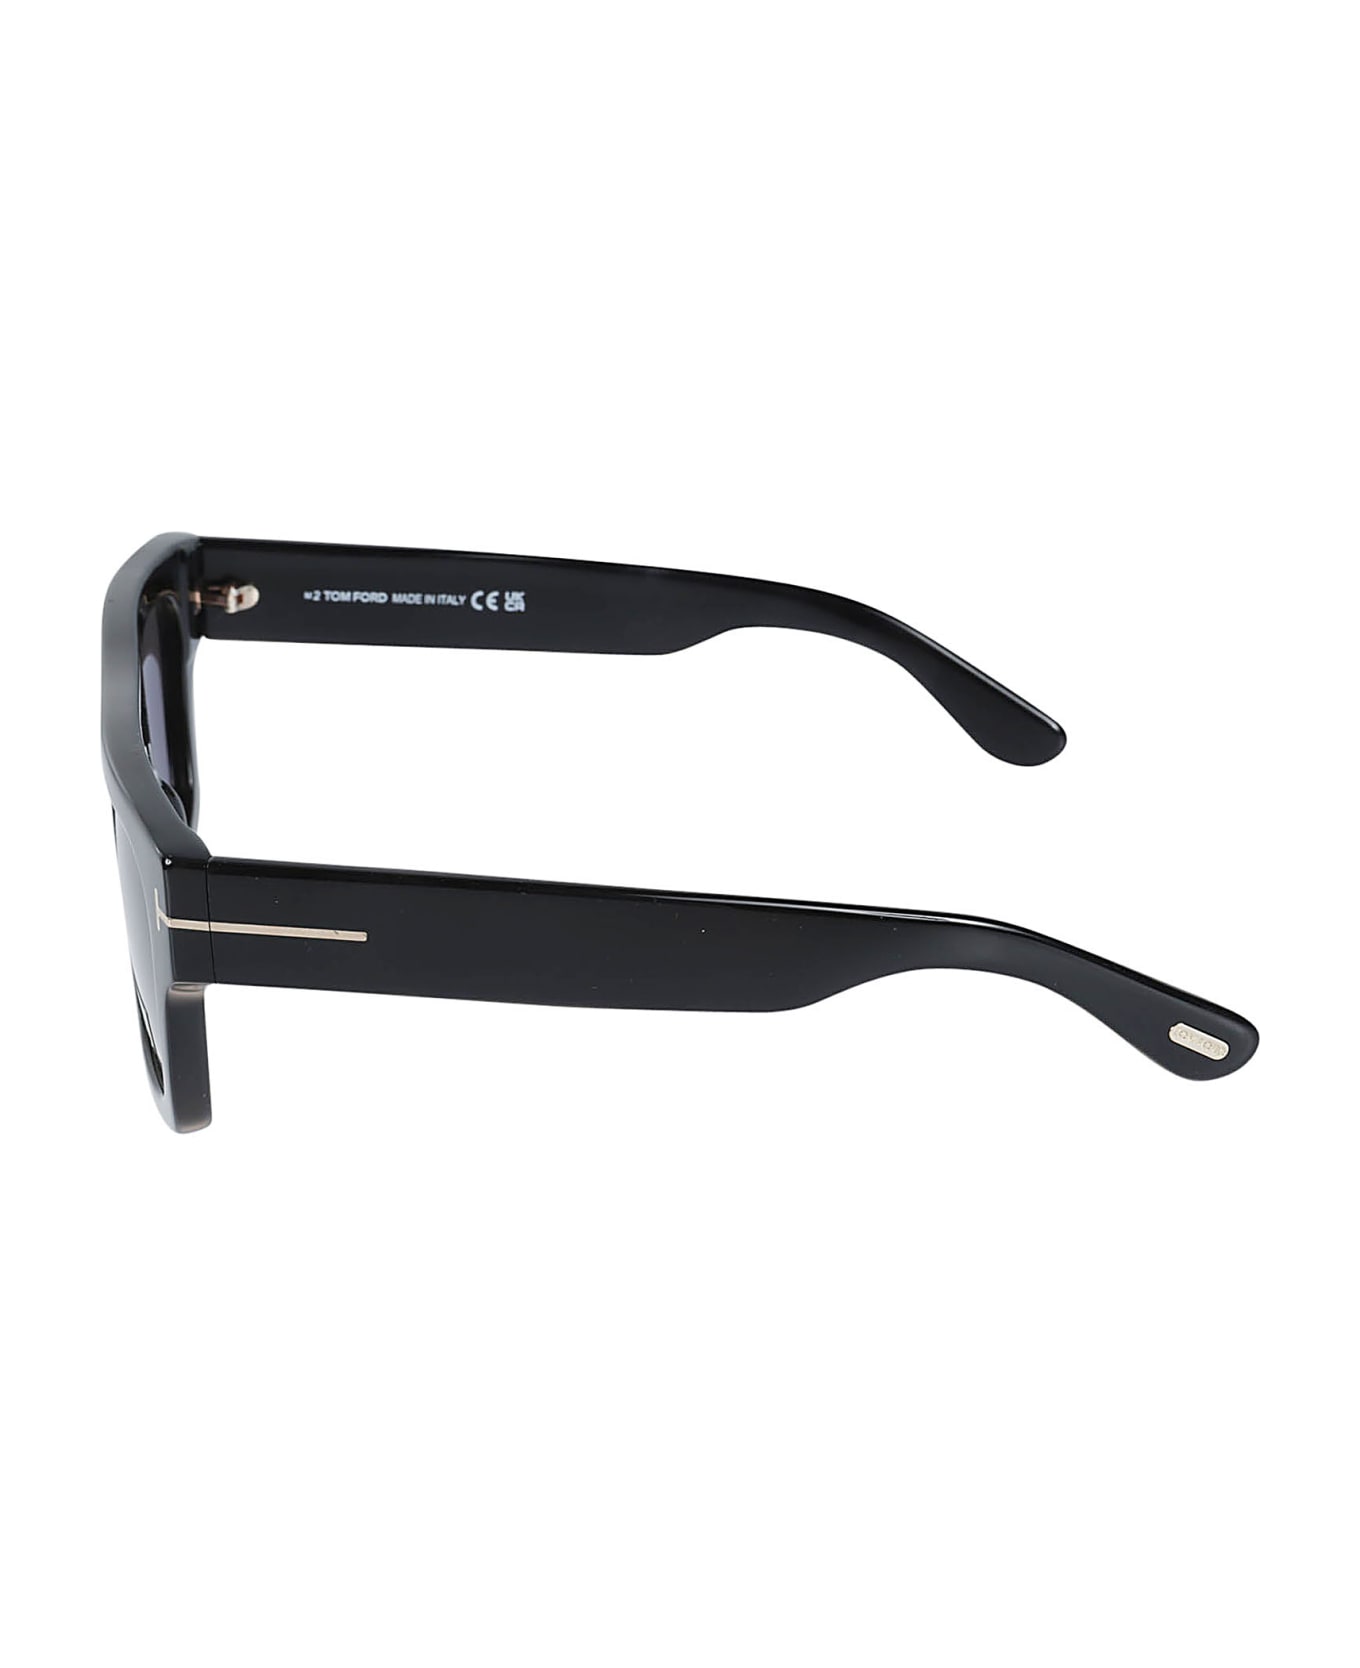 Tom Ford Eyewear Fausto Geometric Sunglasses - 01A サングラス